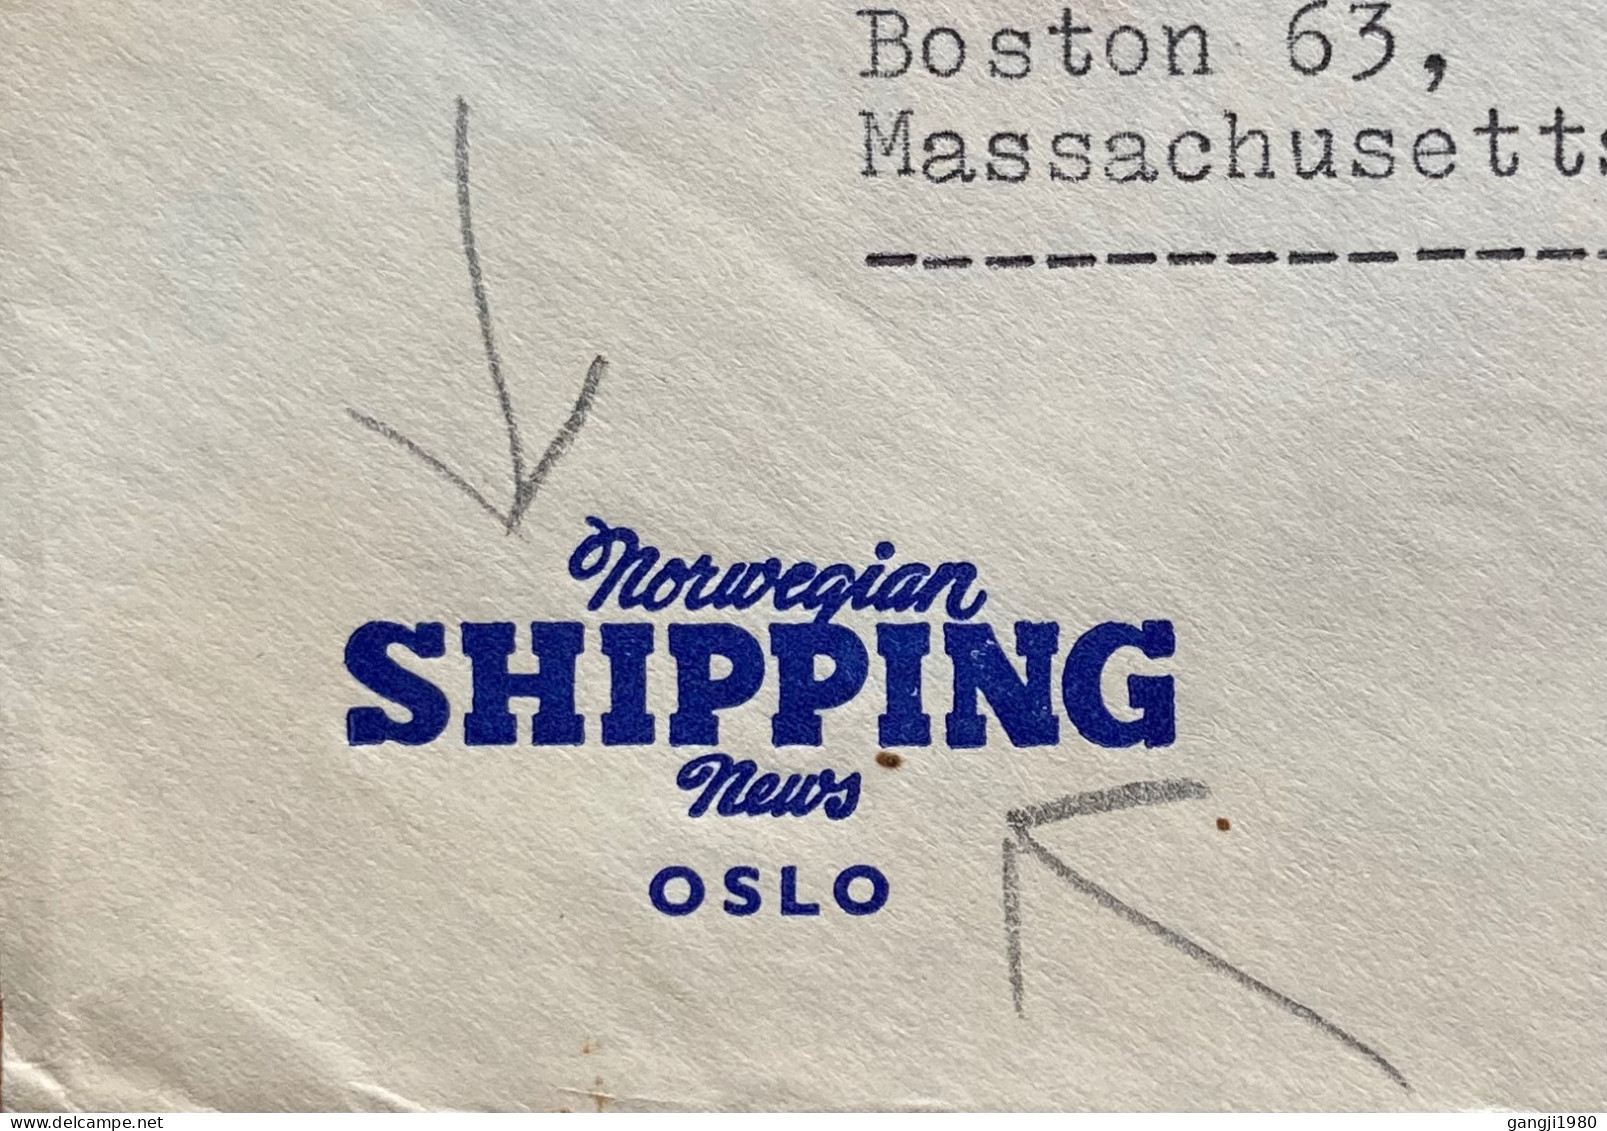 NORWAY 1956, COVER USED TO USA, NORWEGIAN SHIPPING NEWS, MACHINE SLOGAN, KJOP LODDI REISE LOTTENS LOTTERI, KING HAAKON S - Storia Postale